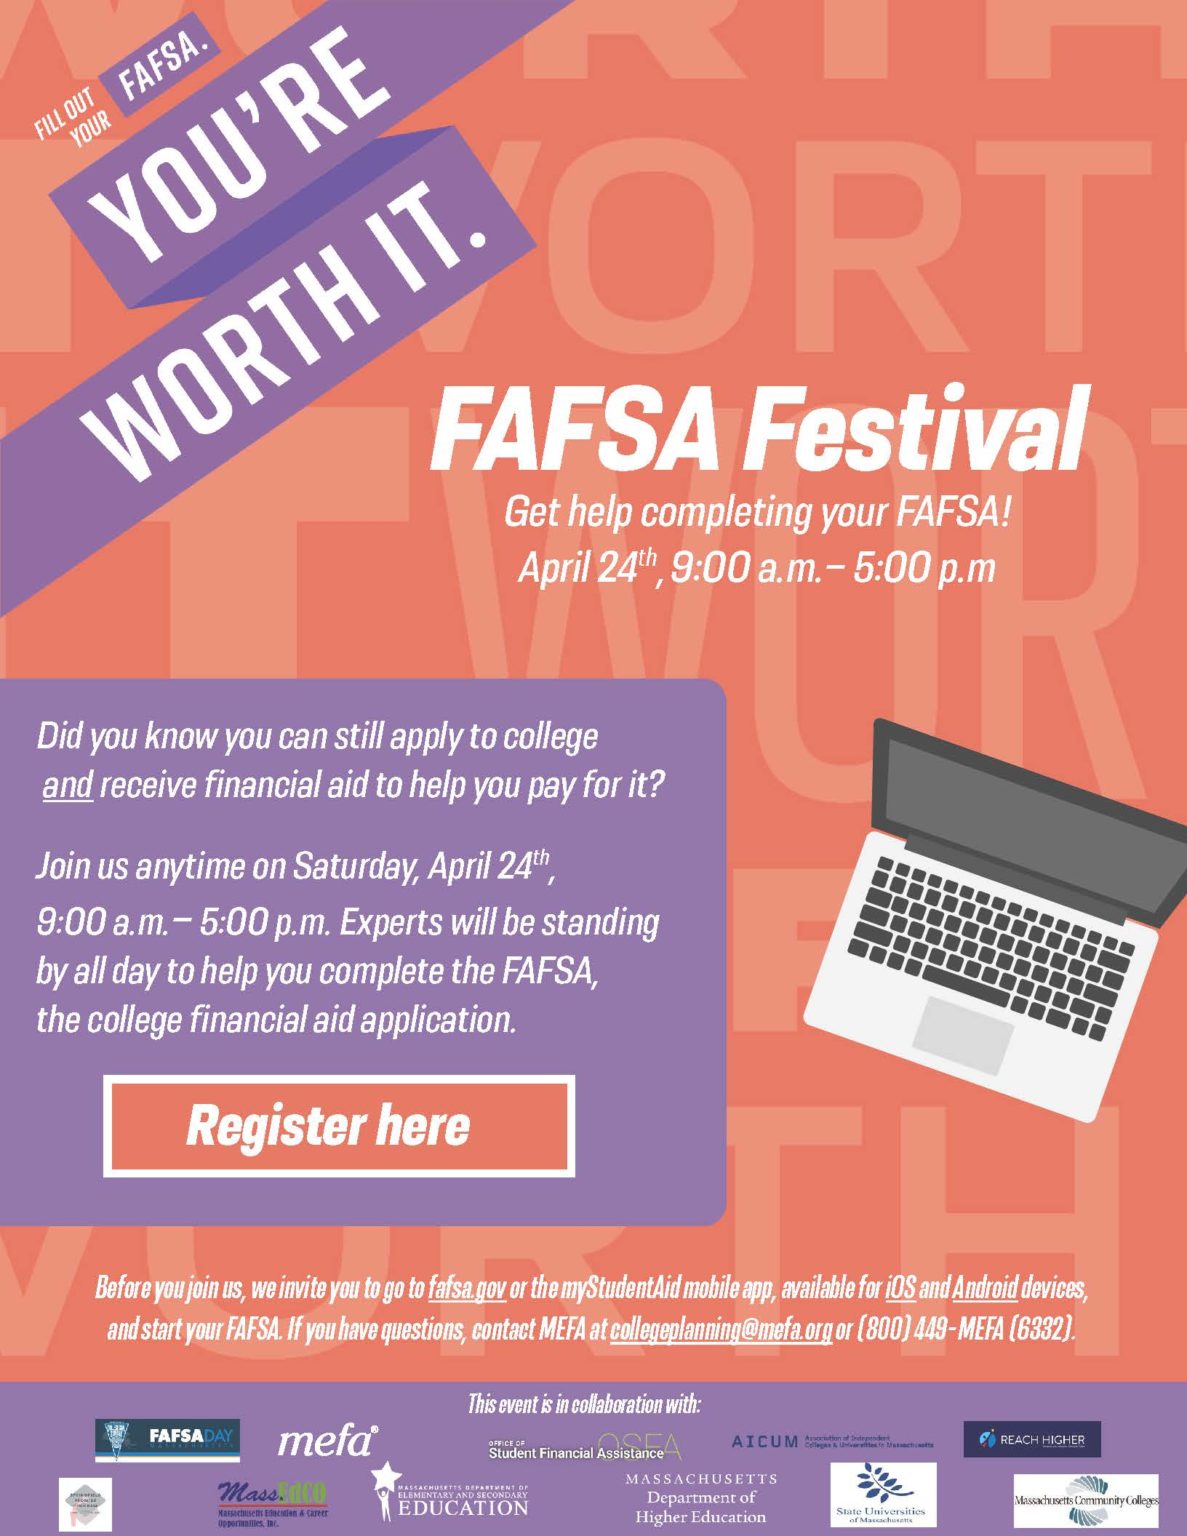 FAFSA Day MASFAA Massachusetts Association of Student Financial Aid